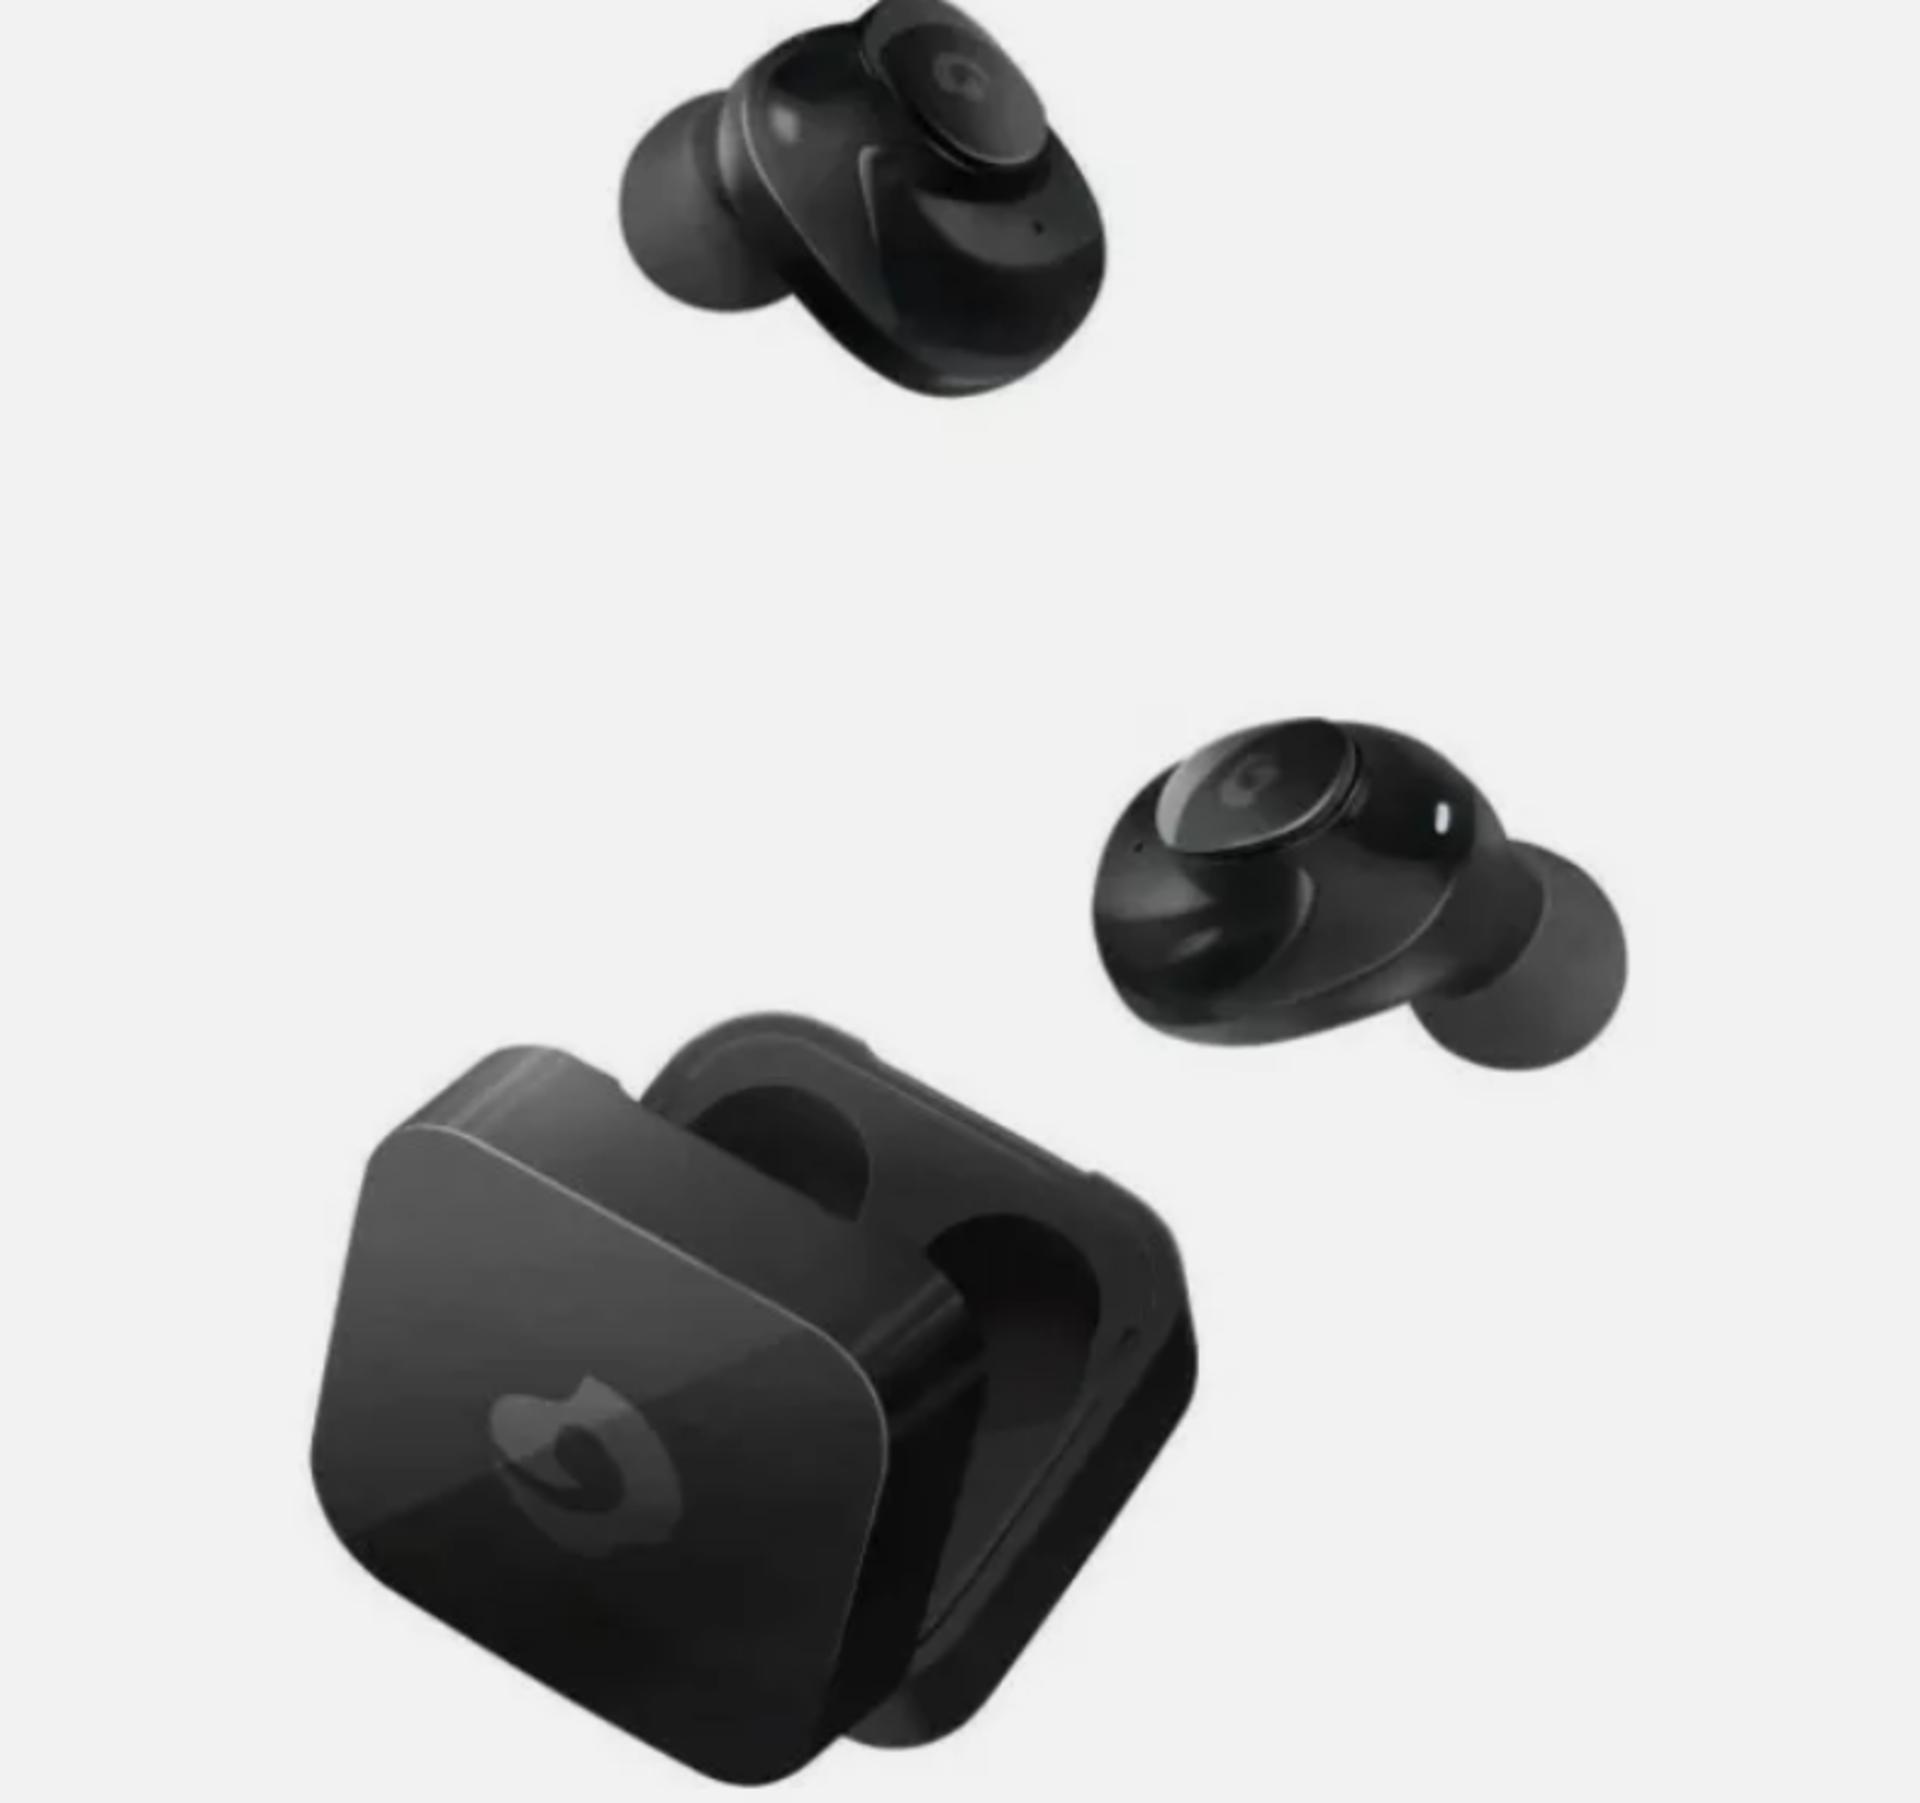 Glidic Sound Air Tw-5000S True Wireless Earbuds - Brand New Still Sealed - Black - Image 3 of 3